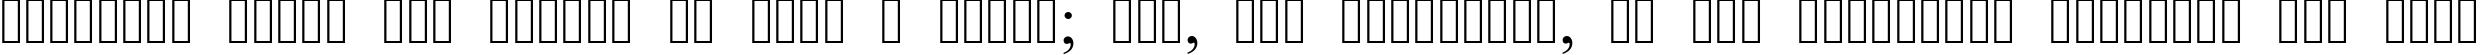 Пример написания шрифтом OpenSymbol текста на испанском